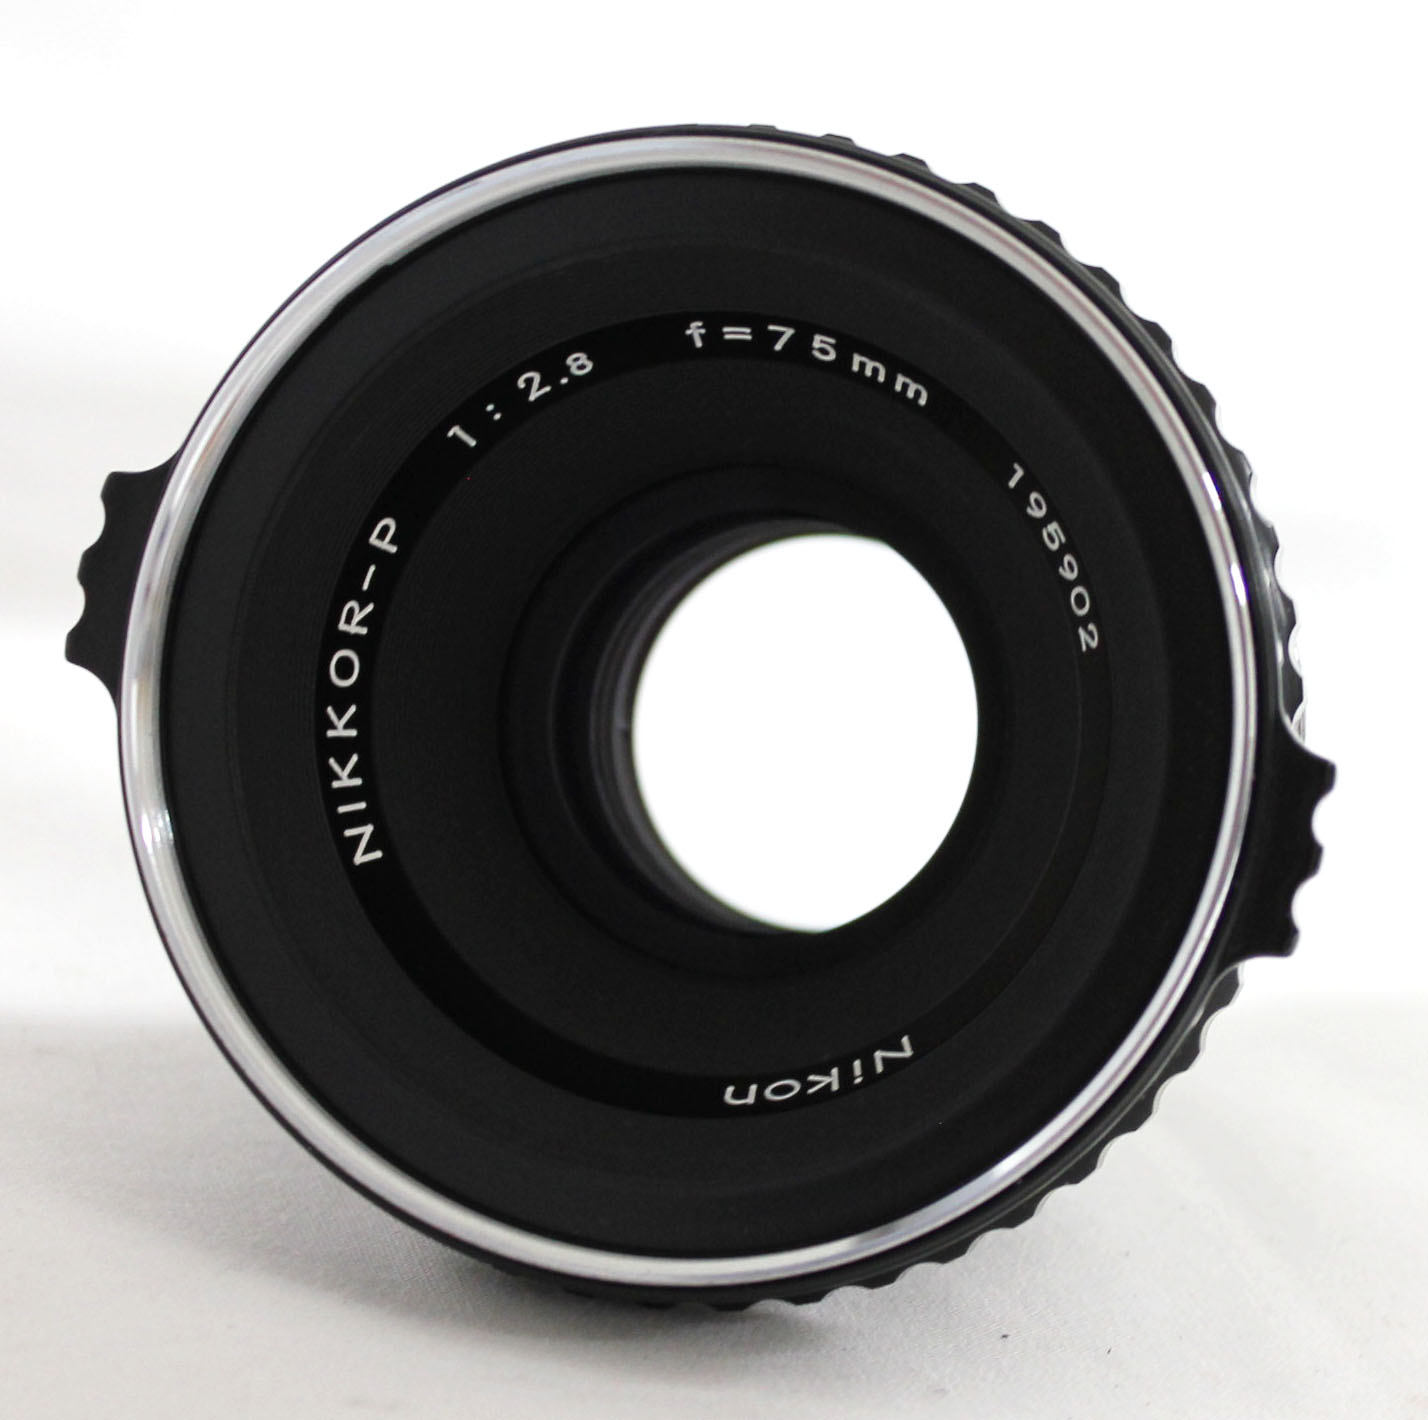  Zenza Bronica EC 6x6 Medium Format Camera w/ Nikkor-P 75mm F/2.8 Lens from Japan Photo 13